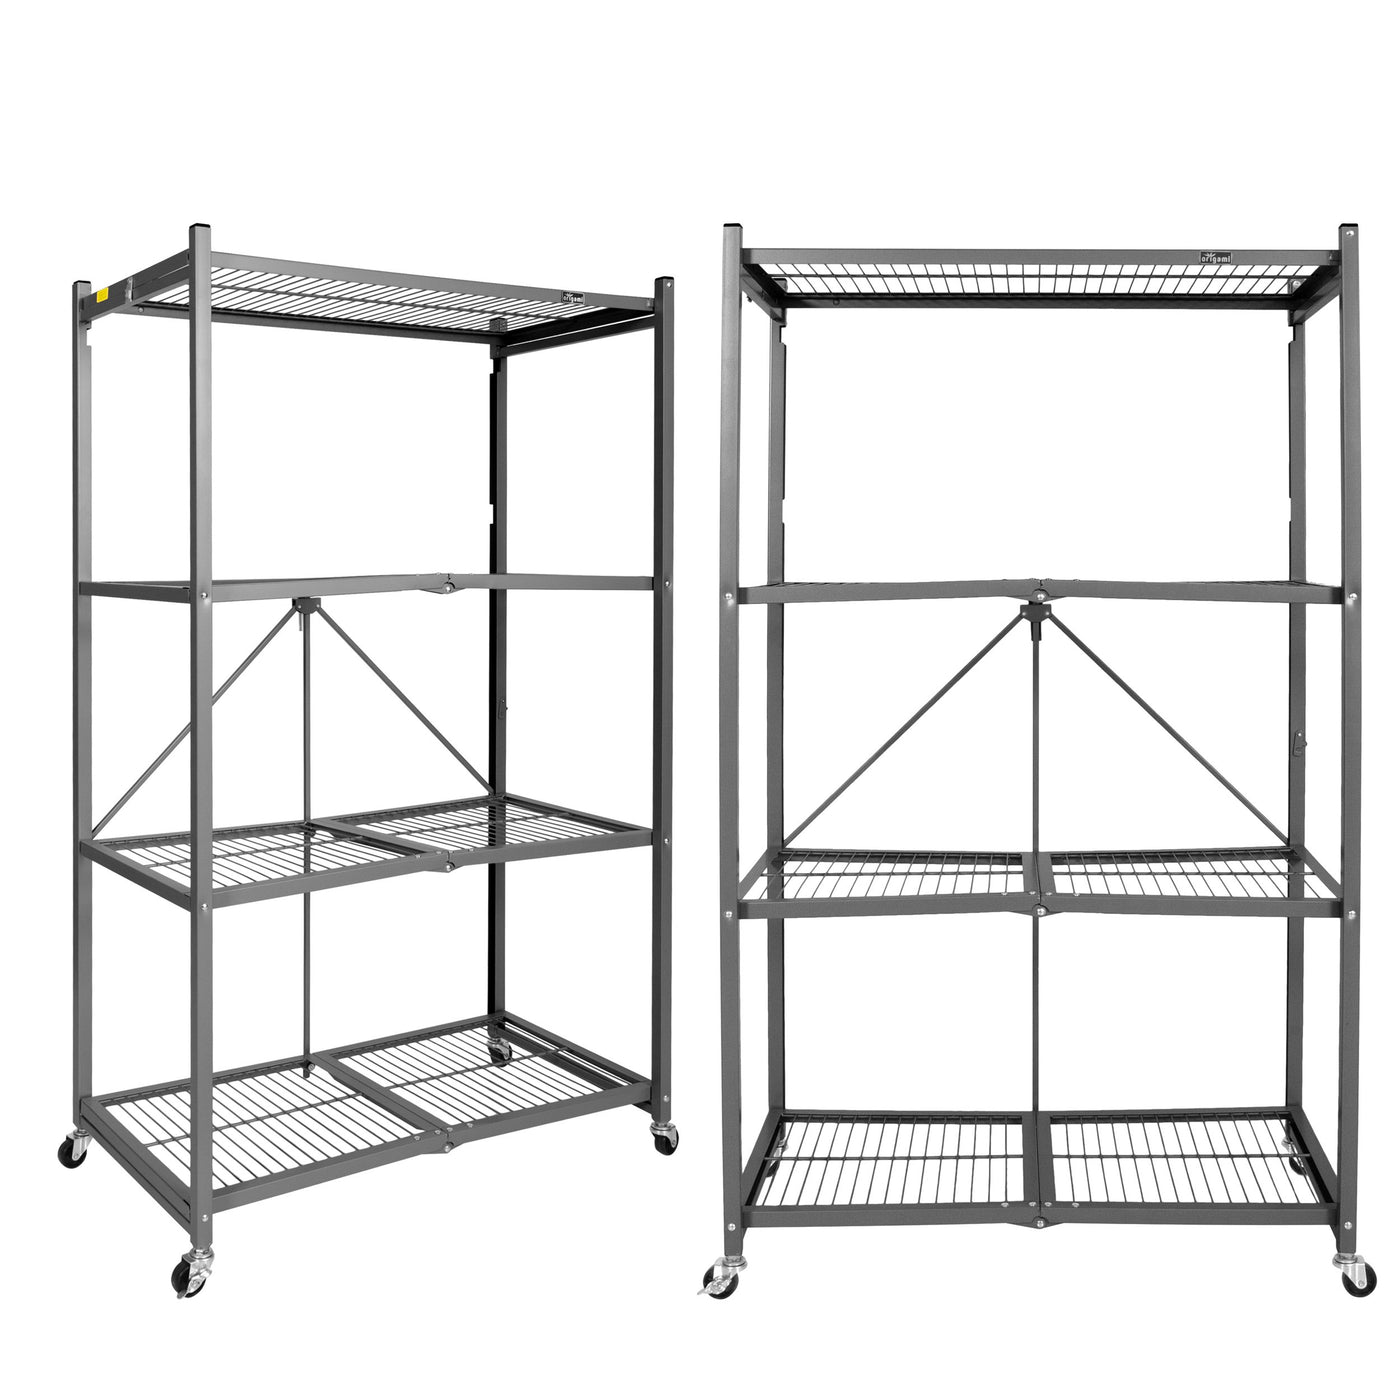 R5 Series: 4-Shelf Large Storage Rack-2 pack